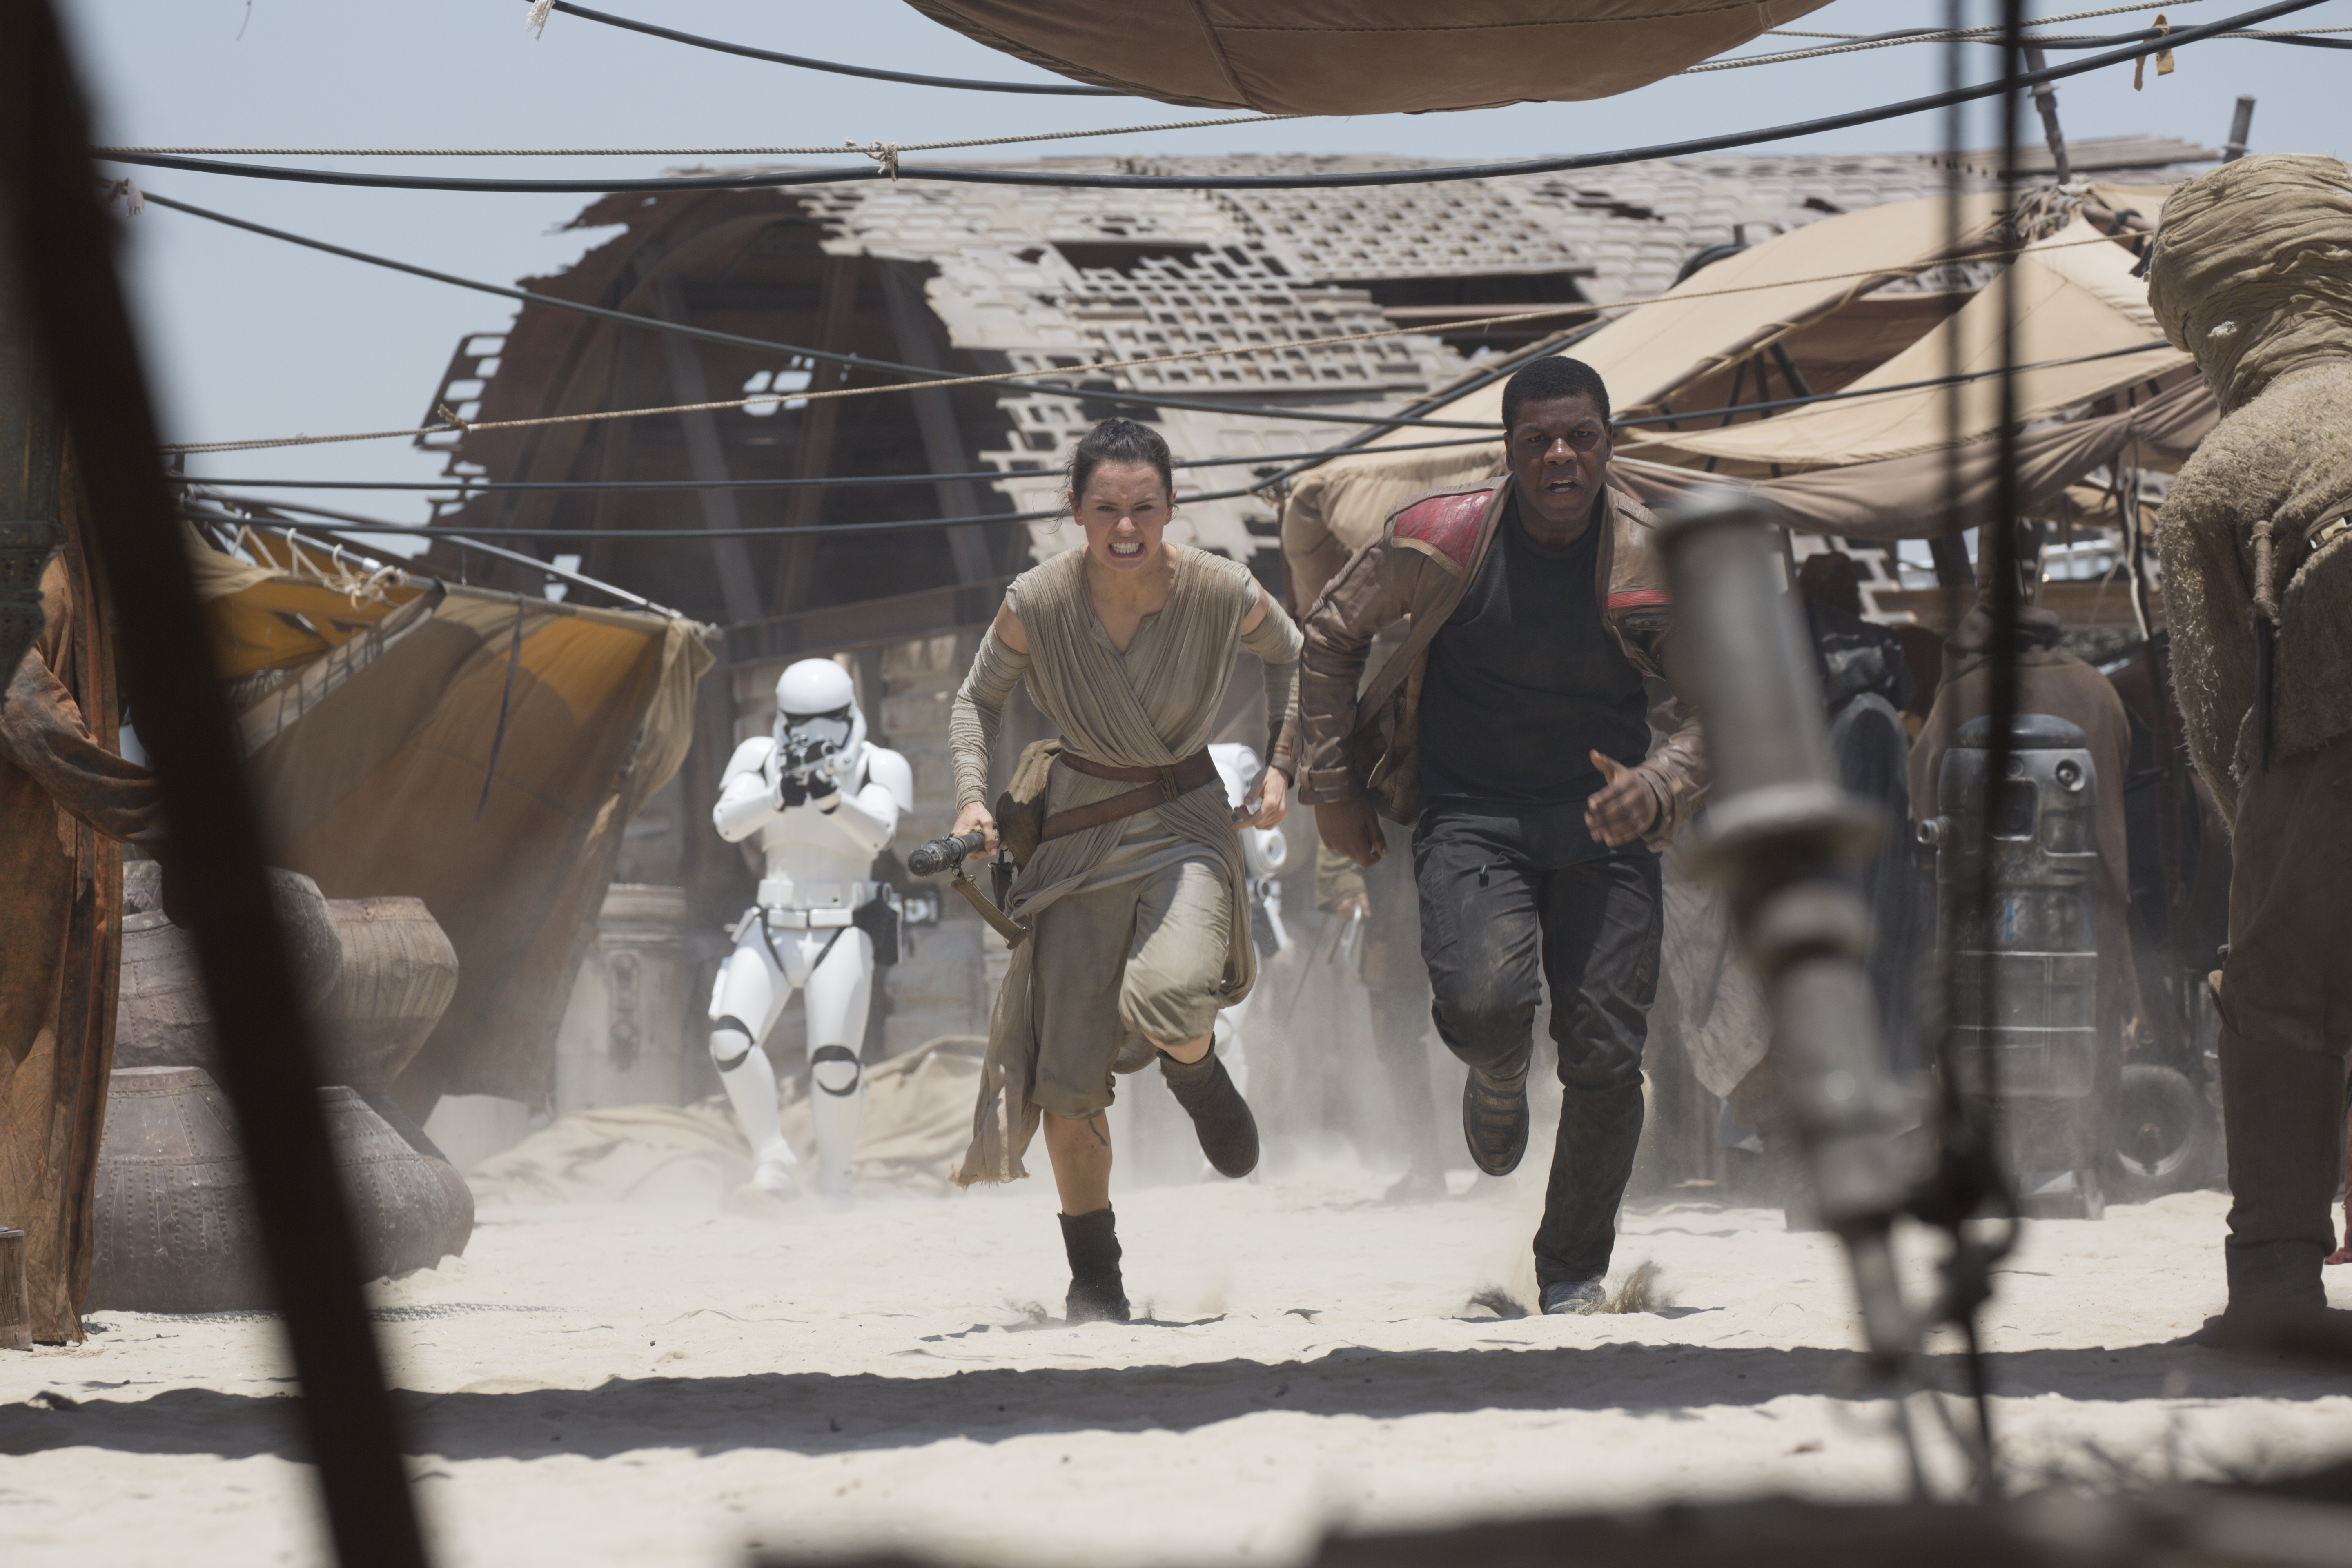 Star Wars: The Force Awakens releases 12/18/15 #TheForceAwakens #StarWarsVII ©Lucasfilm 2015